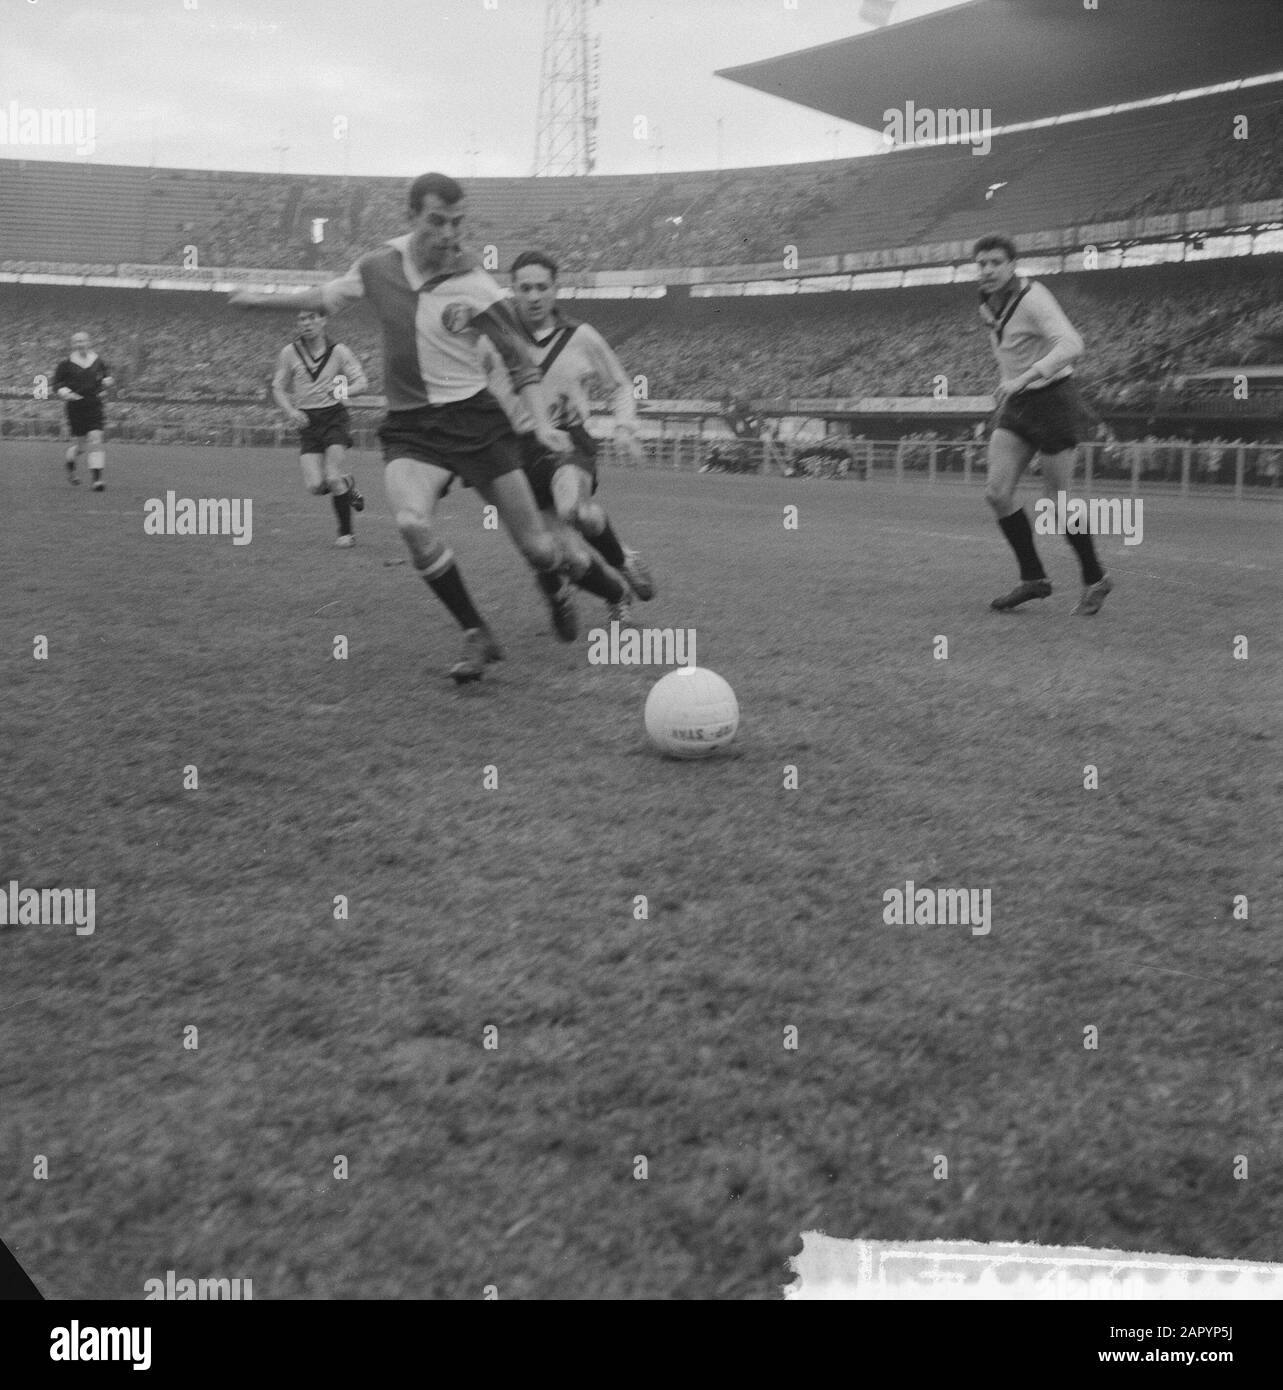 Feyenoord v VVV 3-3, Coen Moulijn in action Date: January 8, 1961 Location: Rotterdam, South-Holland Keywords: sport, football Personal name: Moulijn, Coen Institutional name: Feyenoord, VVV Stock Photo